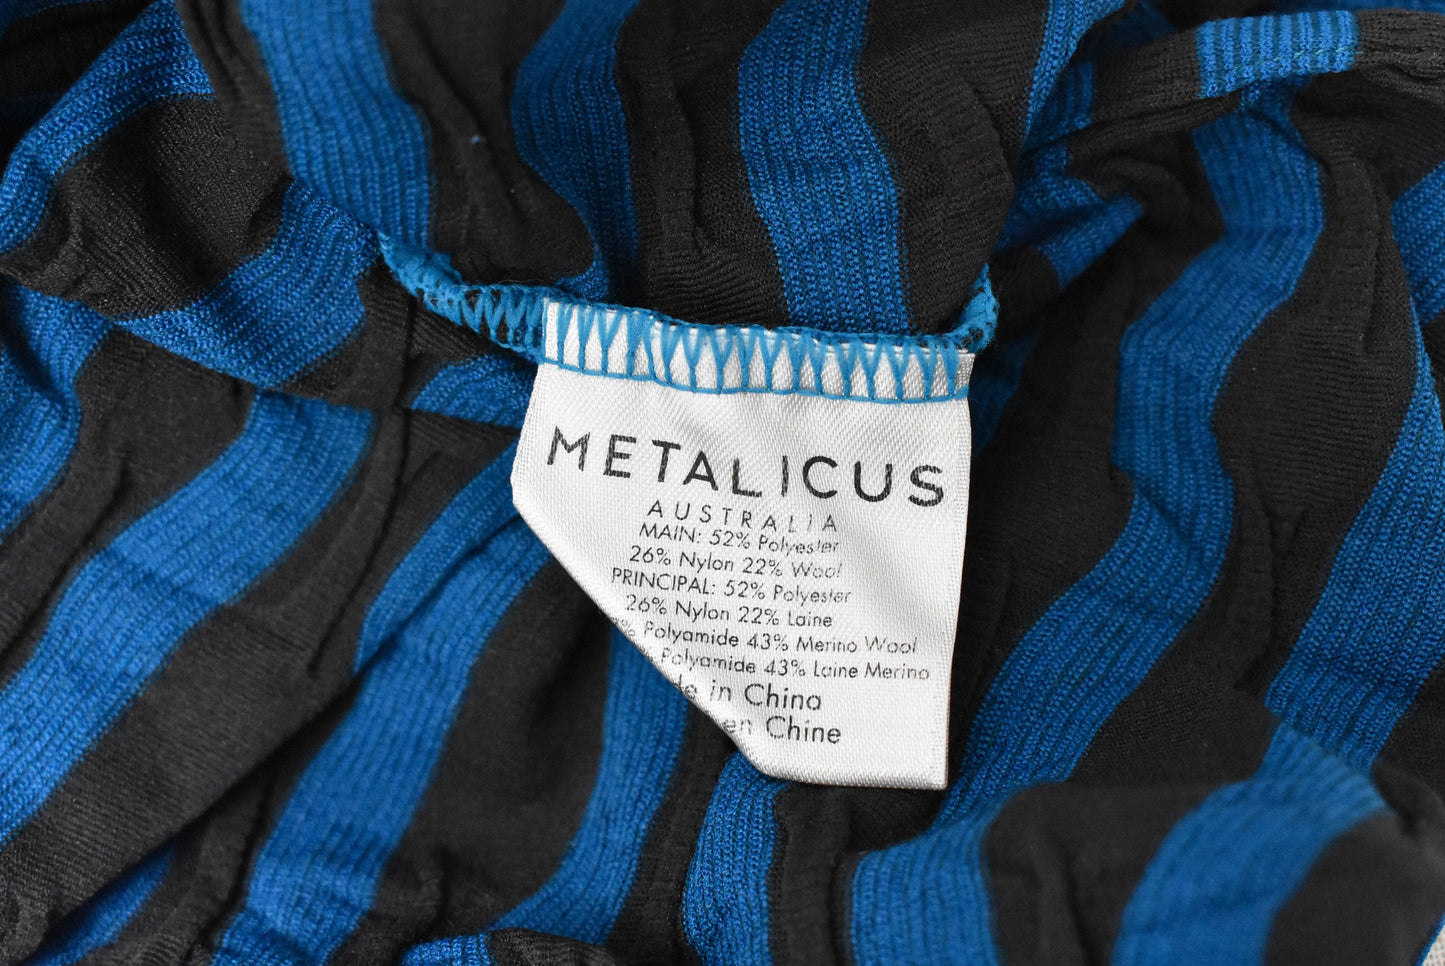 Metalicus black and blue striped wool blend dress, OSFM